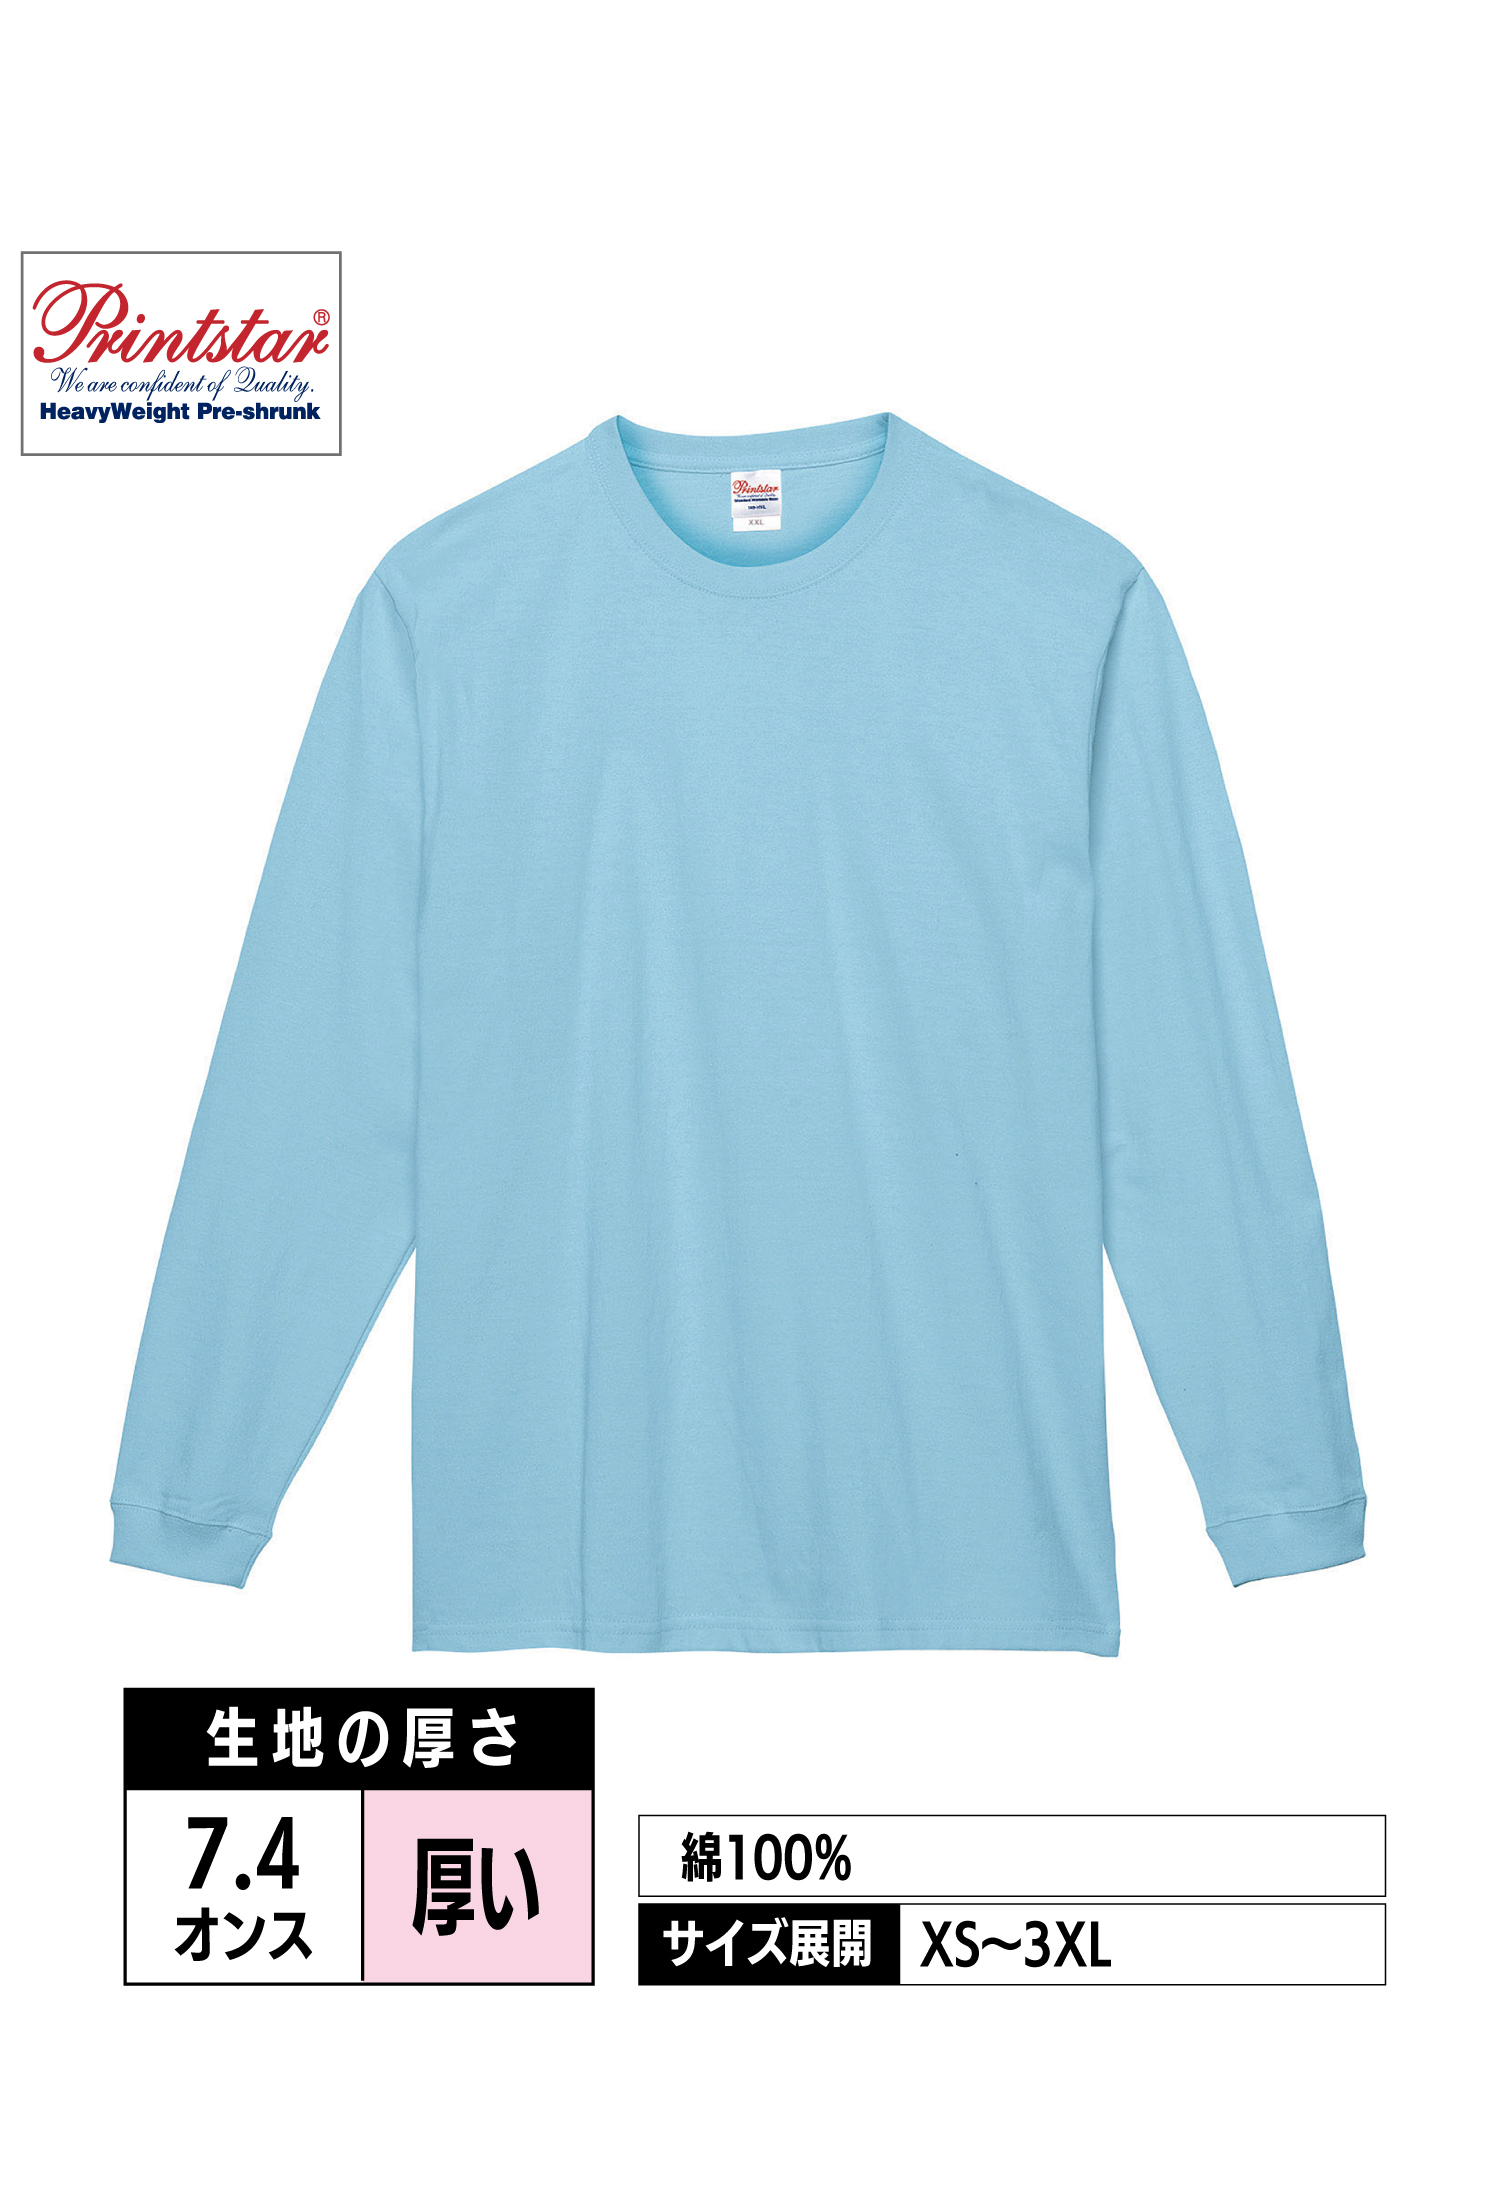 00149-HVL｜7.4オンス スーパーヘビー長袖Tシャツ【全8色】Printstar